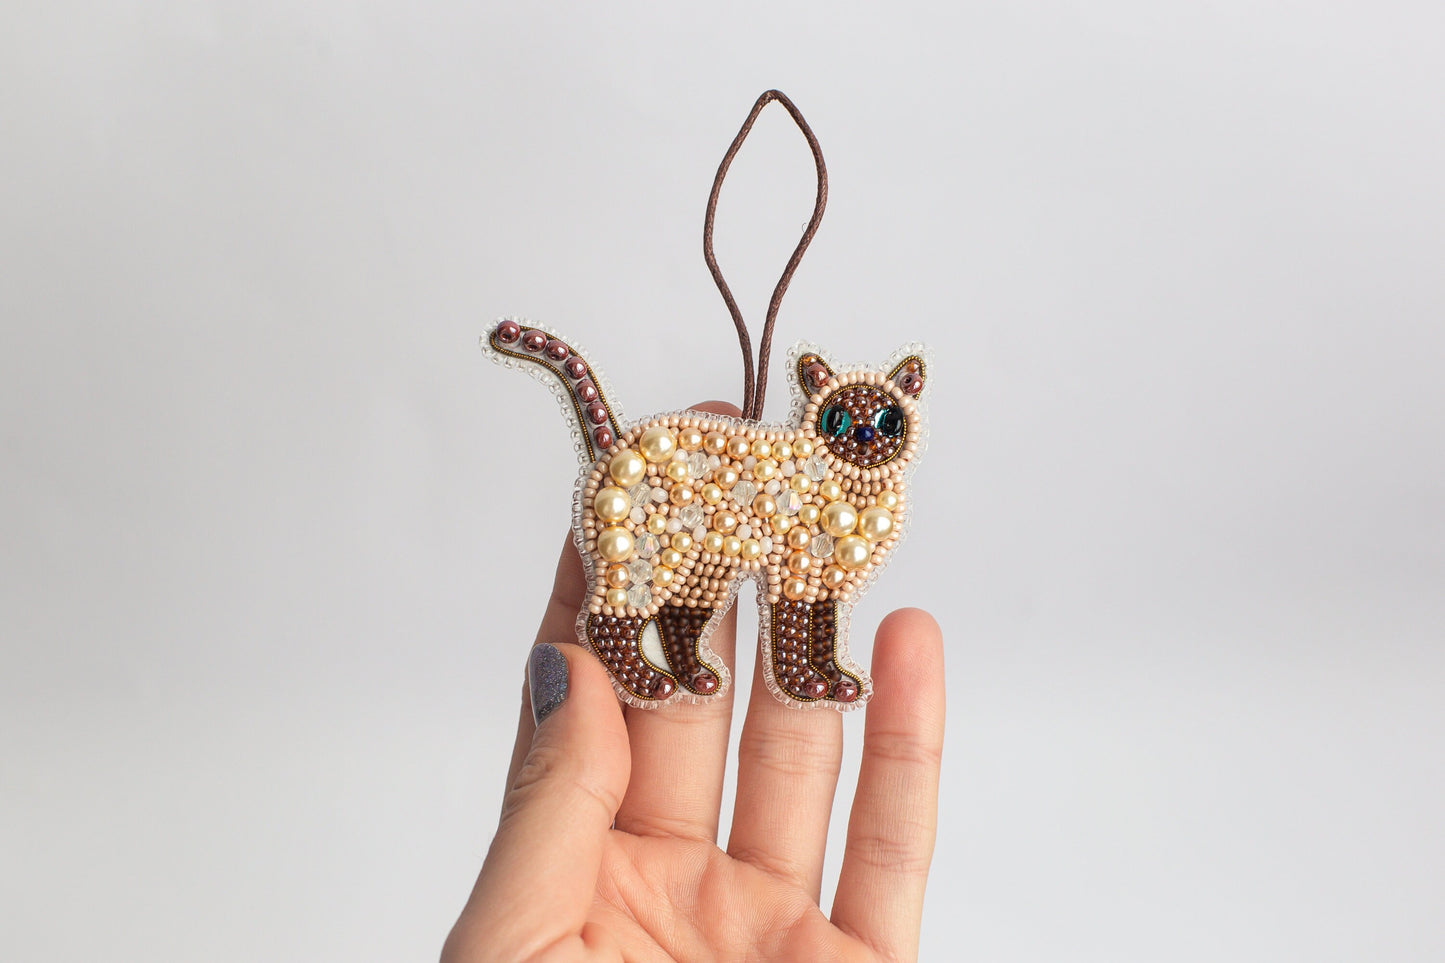 Siamese Cat Bead embroidery kit. Seed Bead Brooch kit. DIY Craft kit. Beadweaving Kit. Needlework beading. Handmade Jewelry Making Kit